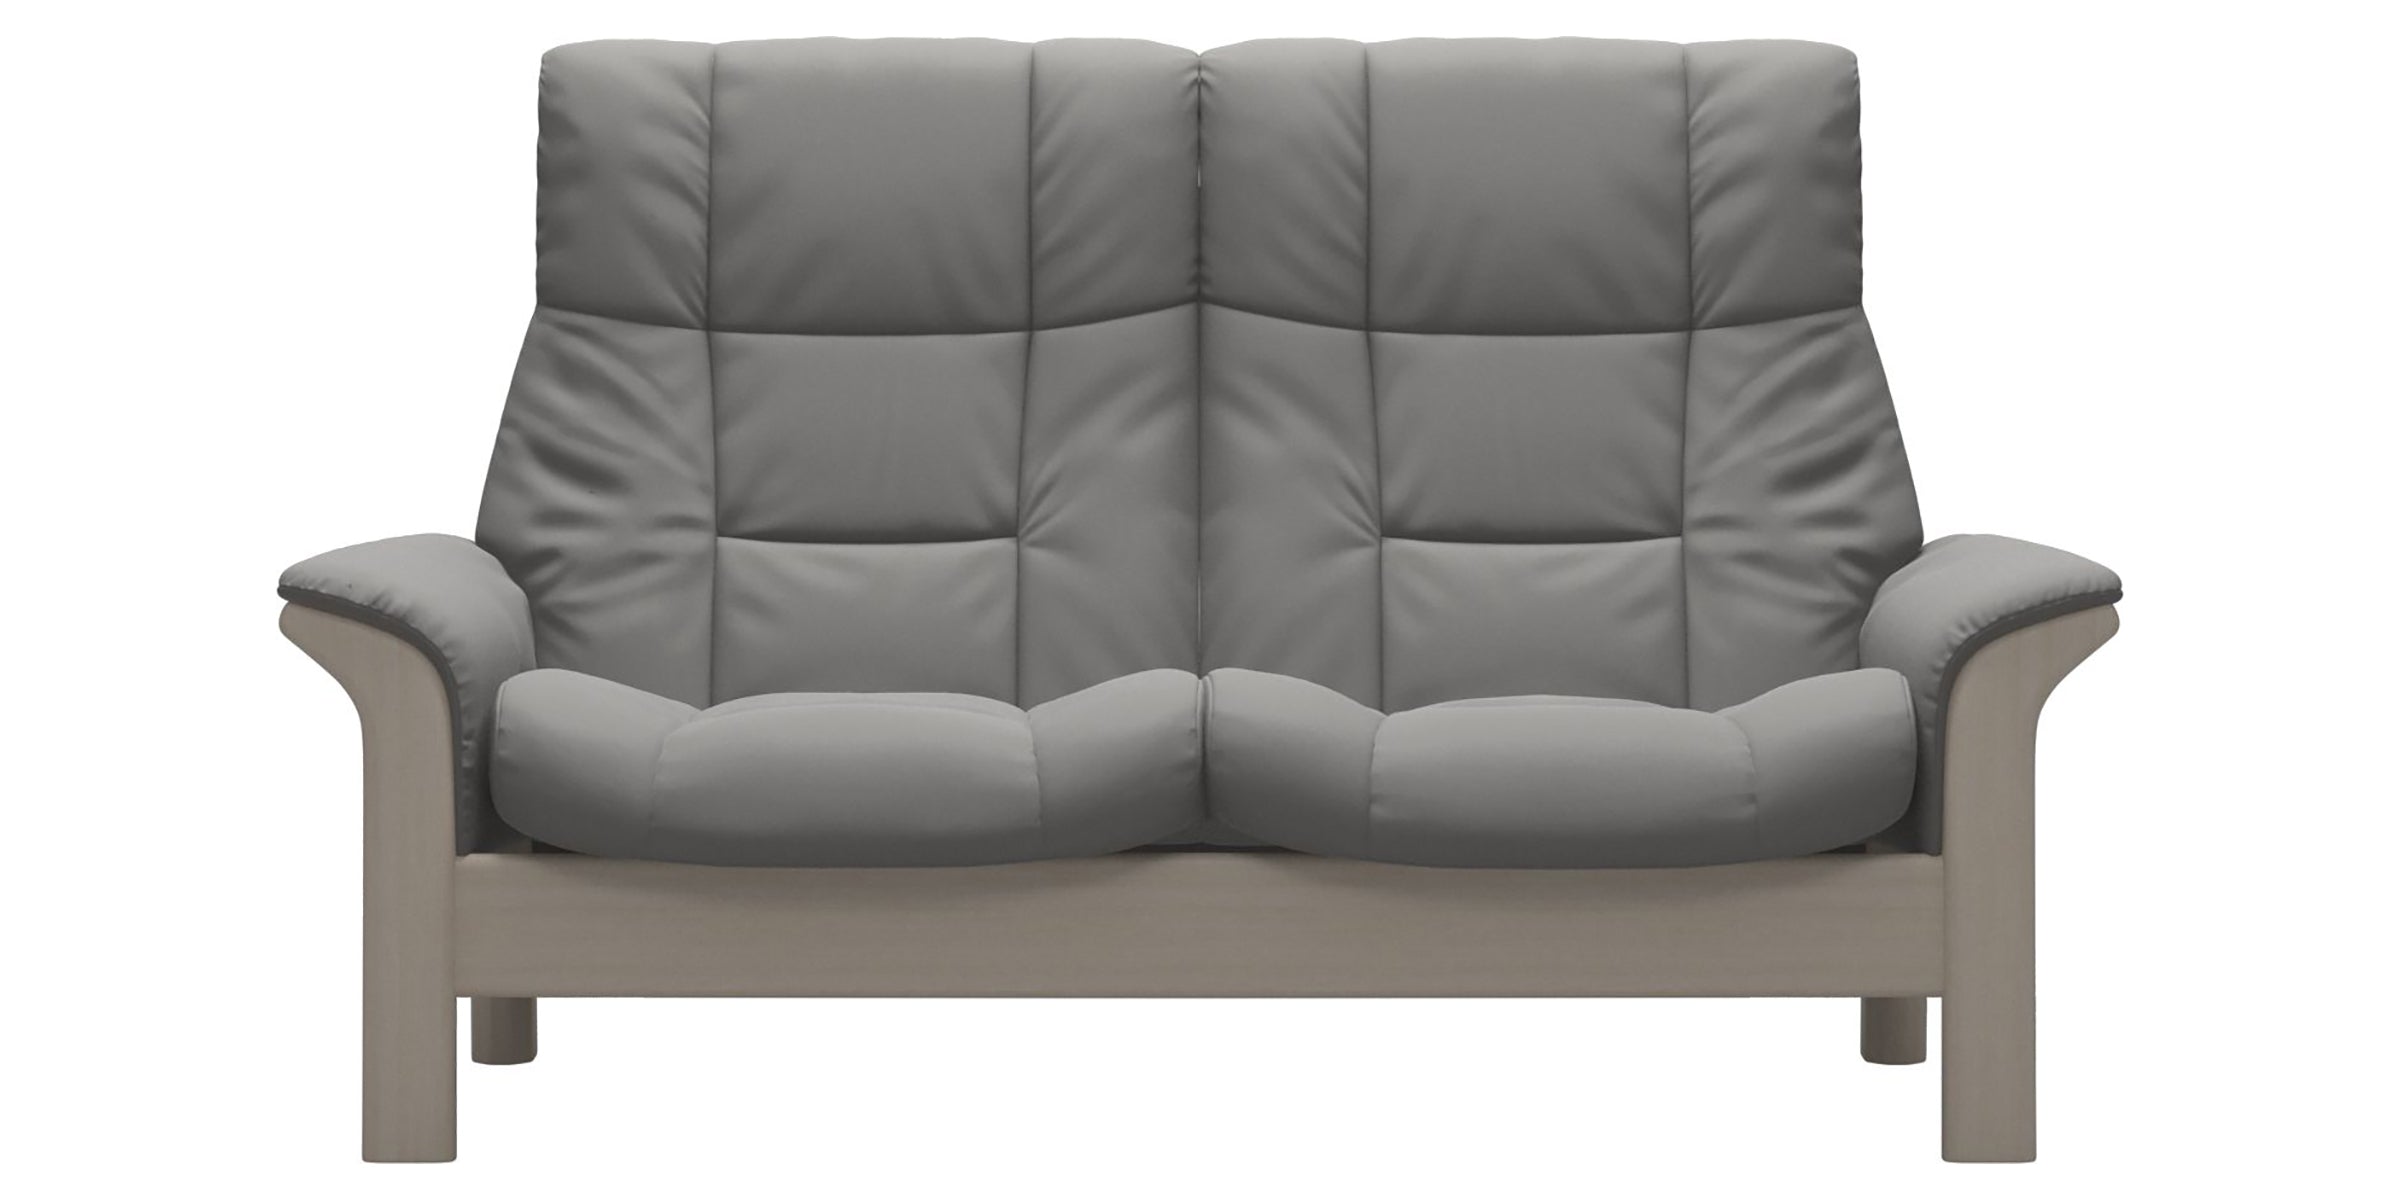 Paloma Leather Silver Grey and Whitewash Base | Stressless Buckingham 2-Seater High Back Sofa | Valley Ridge Furniture